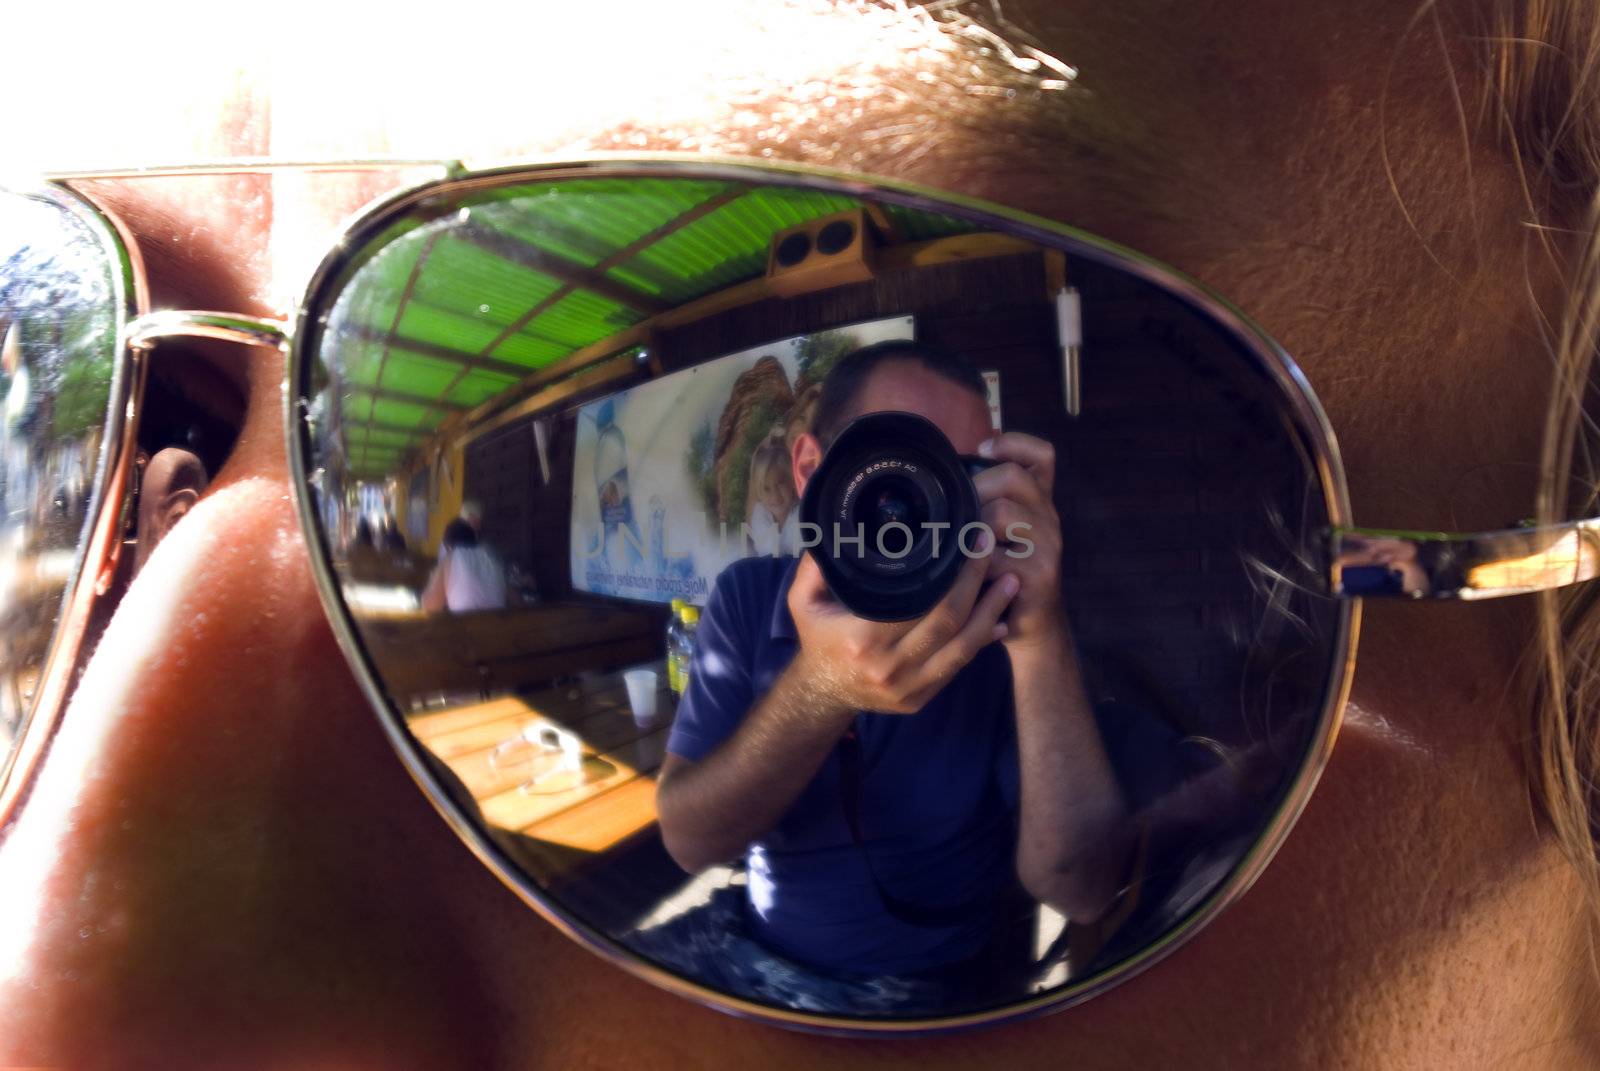 reflect of photograf on sunglass